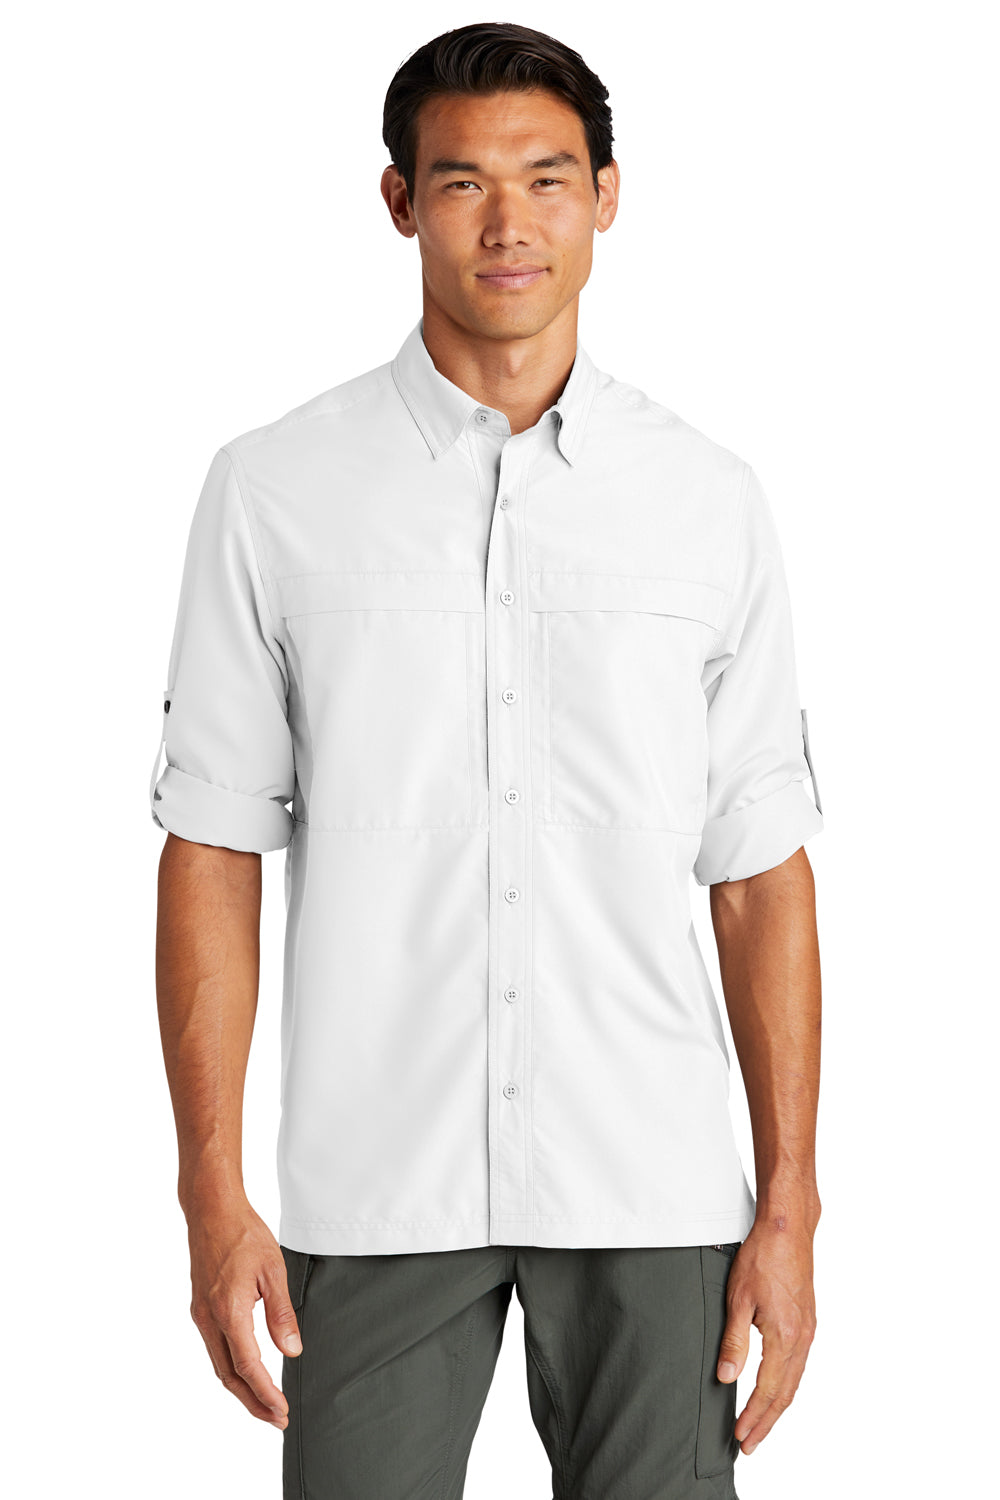 Port Authority W960 UV Daybreak Long Sleeve Button Down Shirt White 3Q